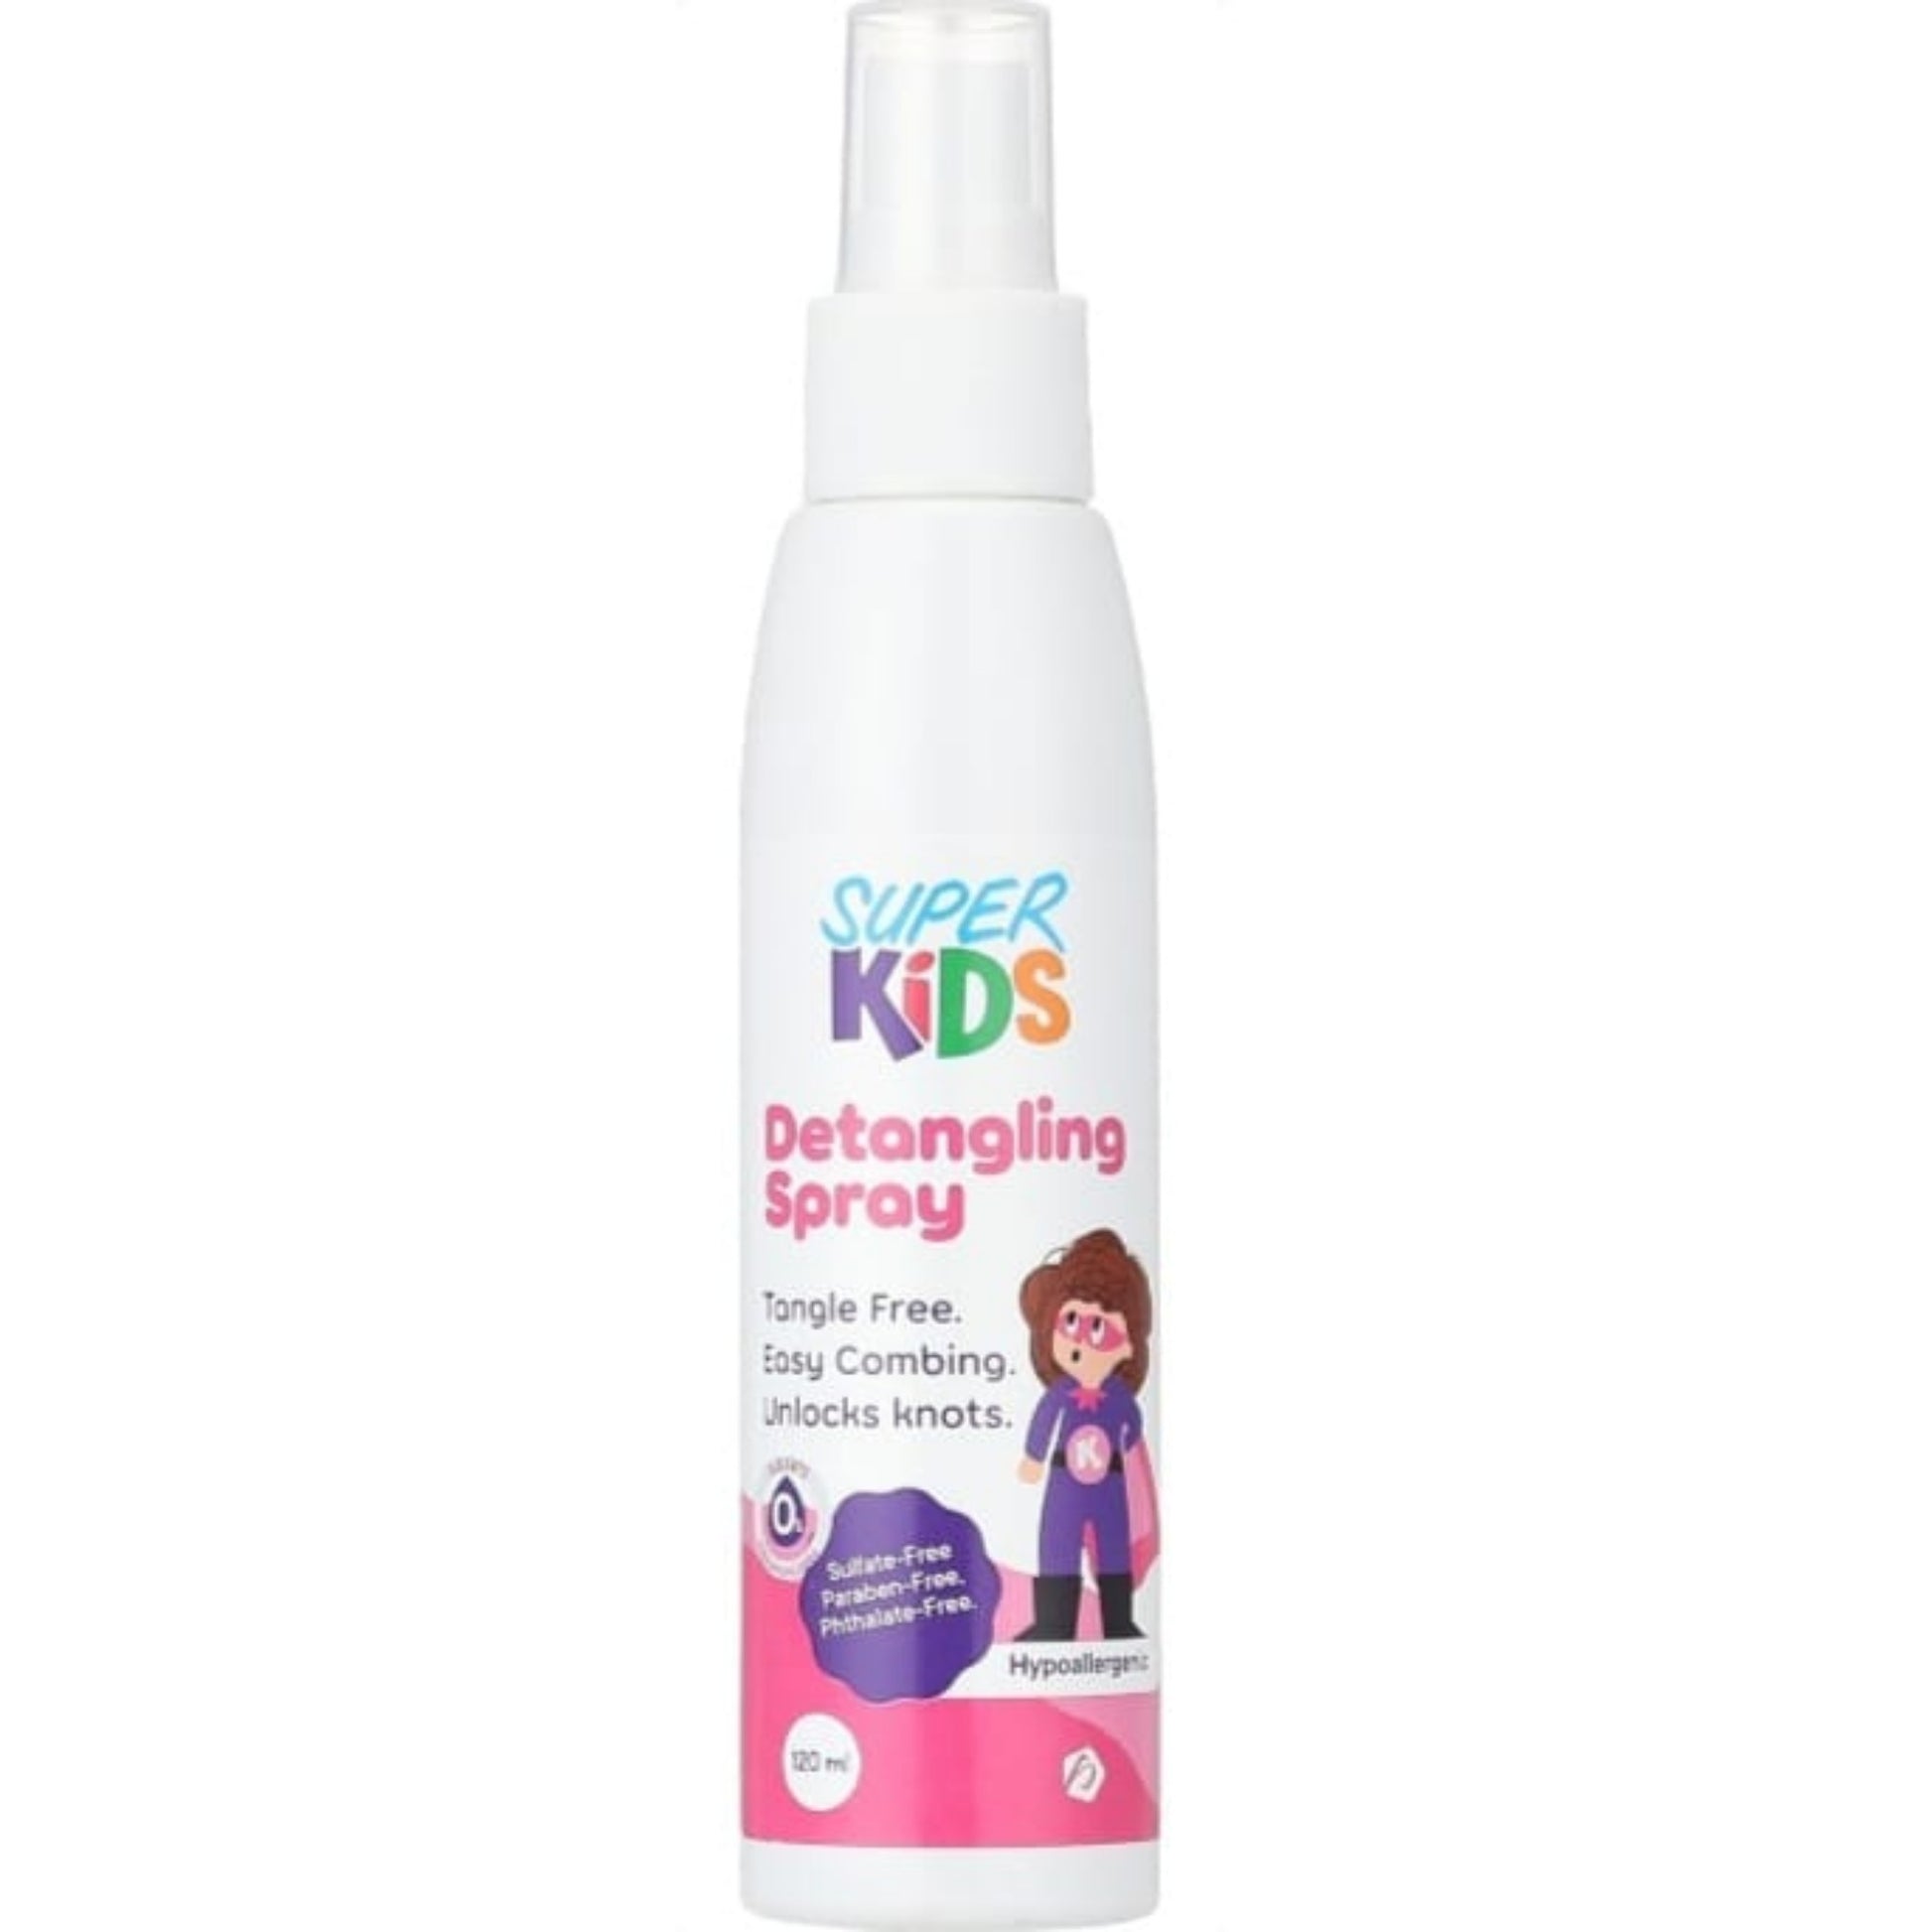 Super Kids Detangling Spray 120 ml بخاخ فك تشابك الشعر للاطفال من سوبر كيدز 120 مل